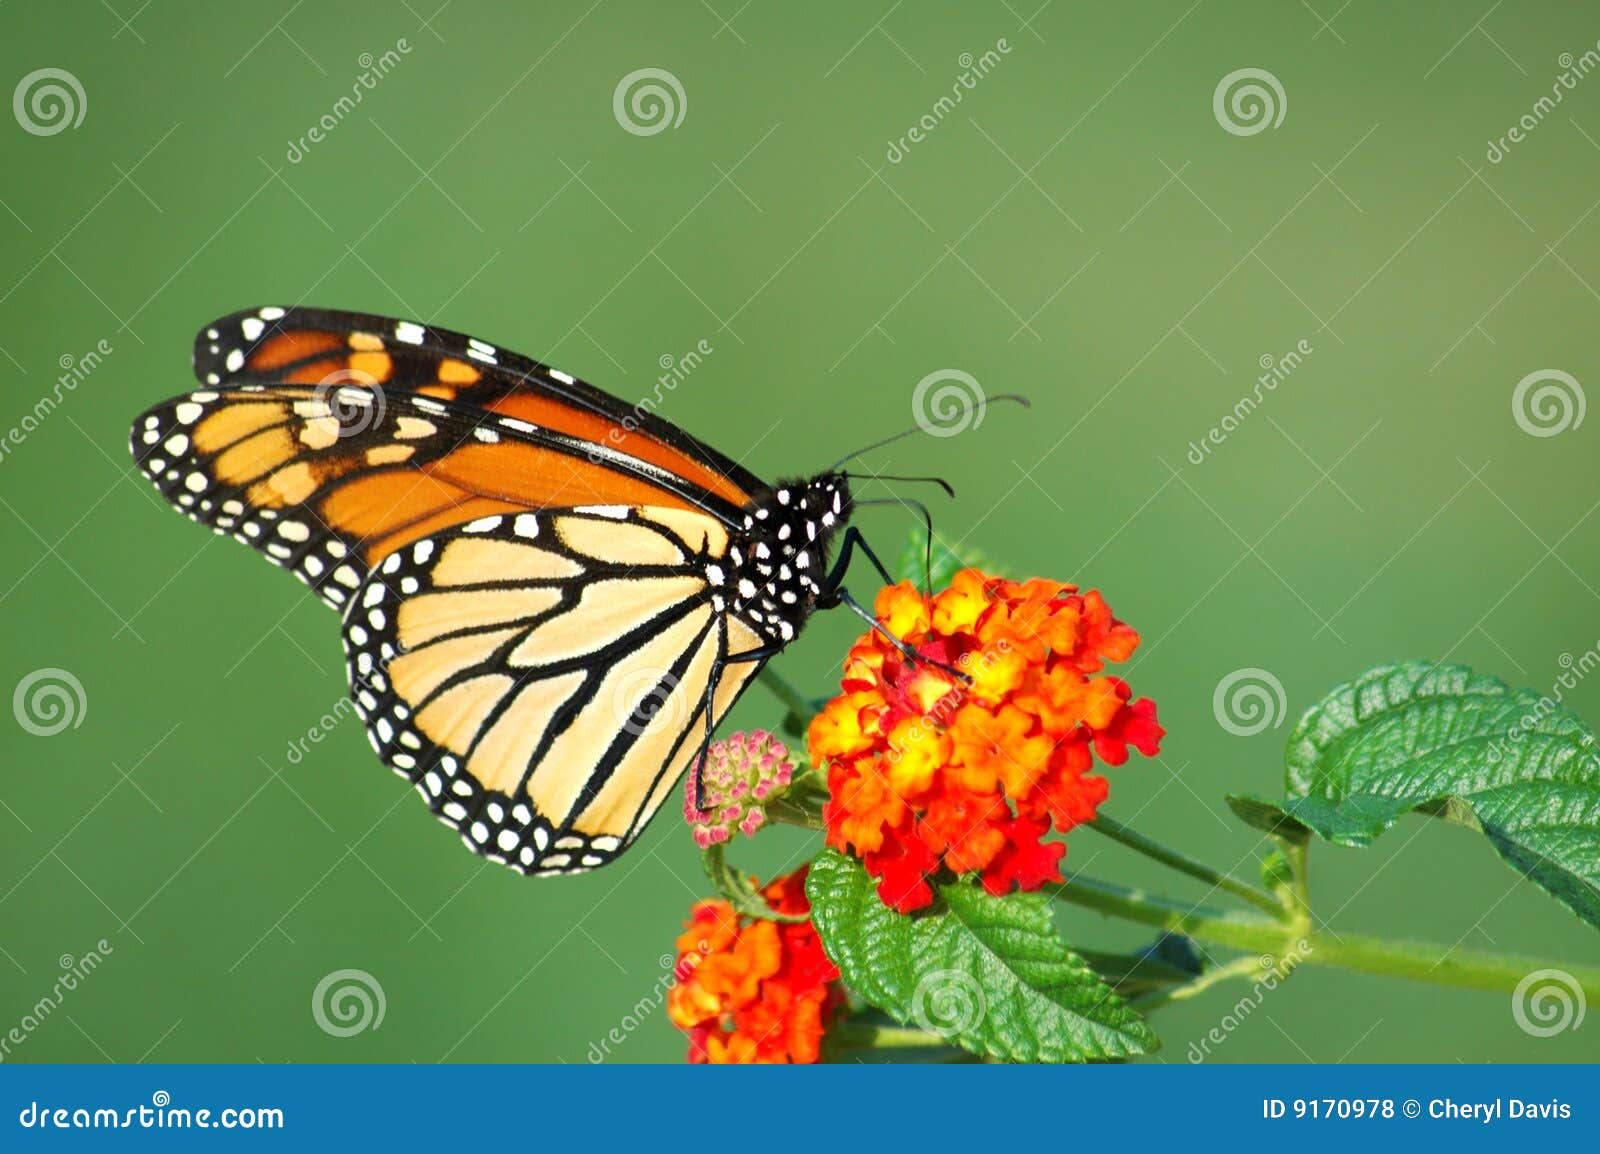 monarch butterfly feeding on lantana